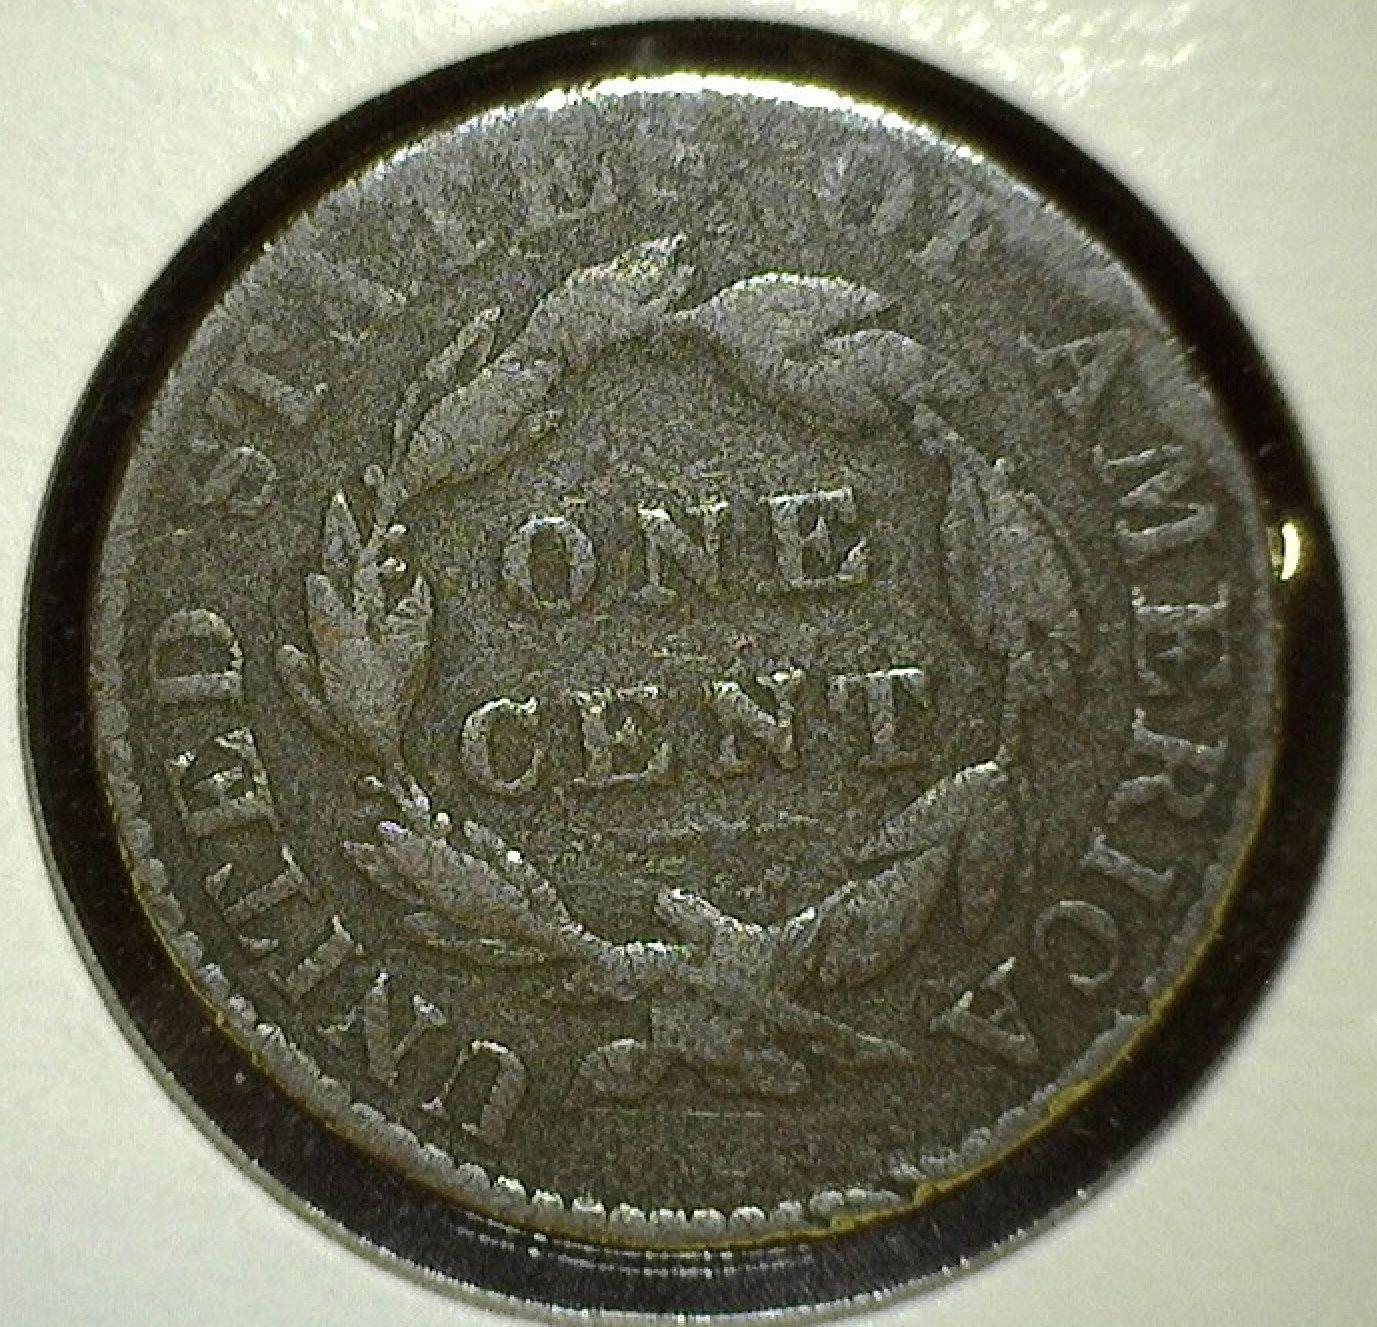 (4) U.S.Large Cents: 1820 Good; (2) 1822 Good; & 1827 VG-F.